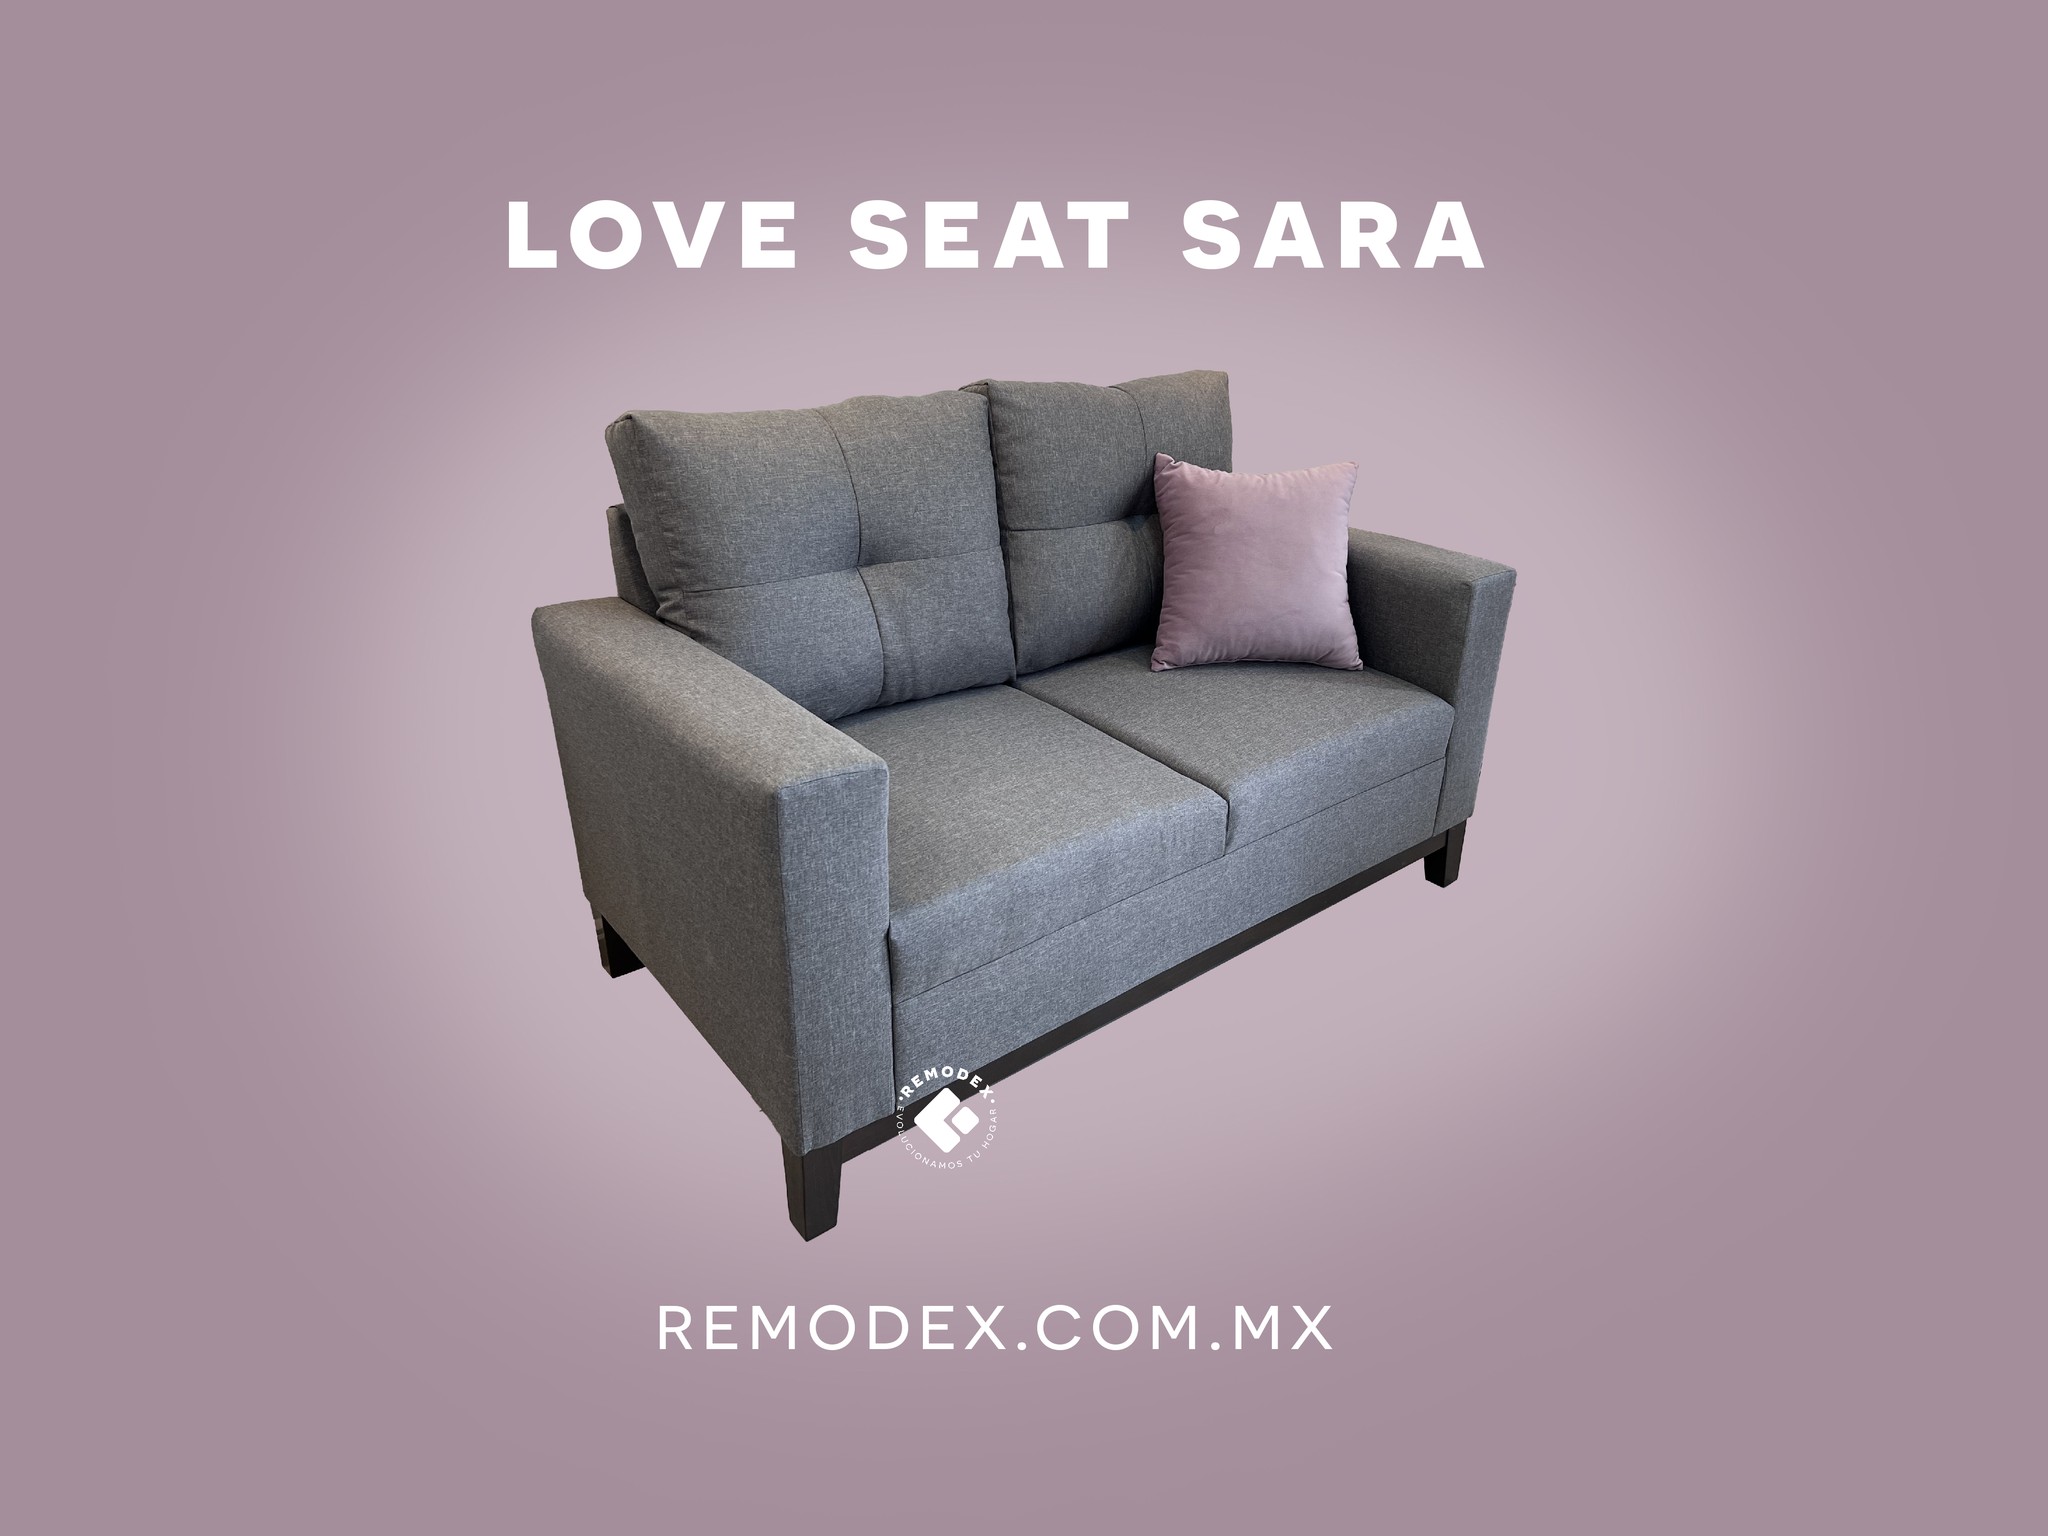 LOVE SEAT SARA